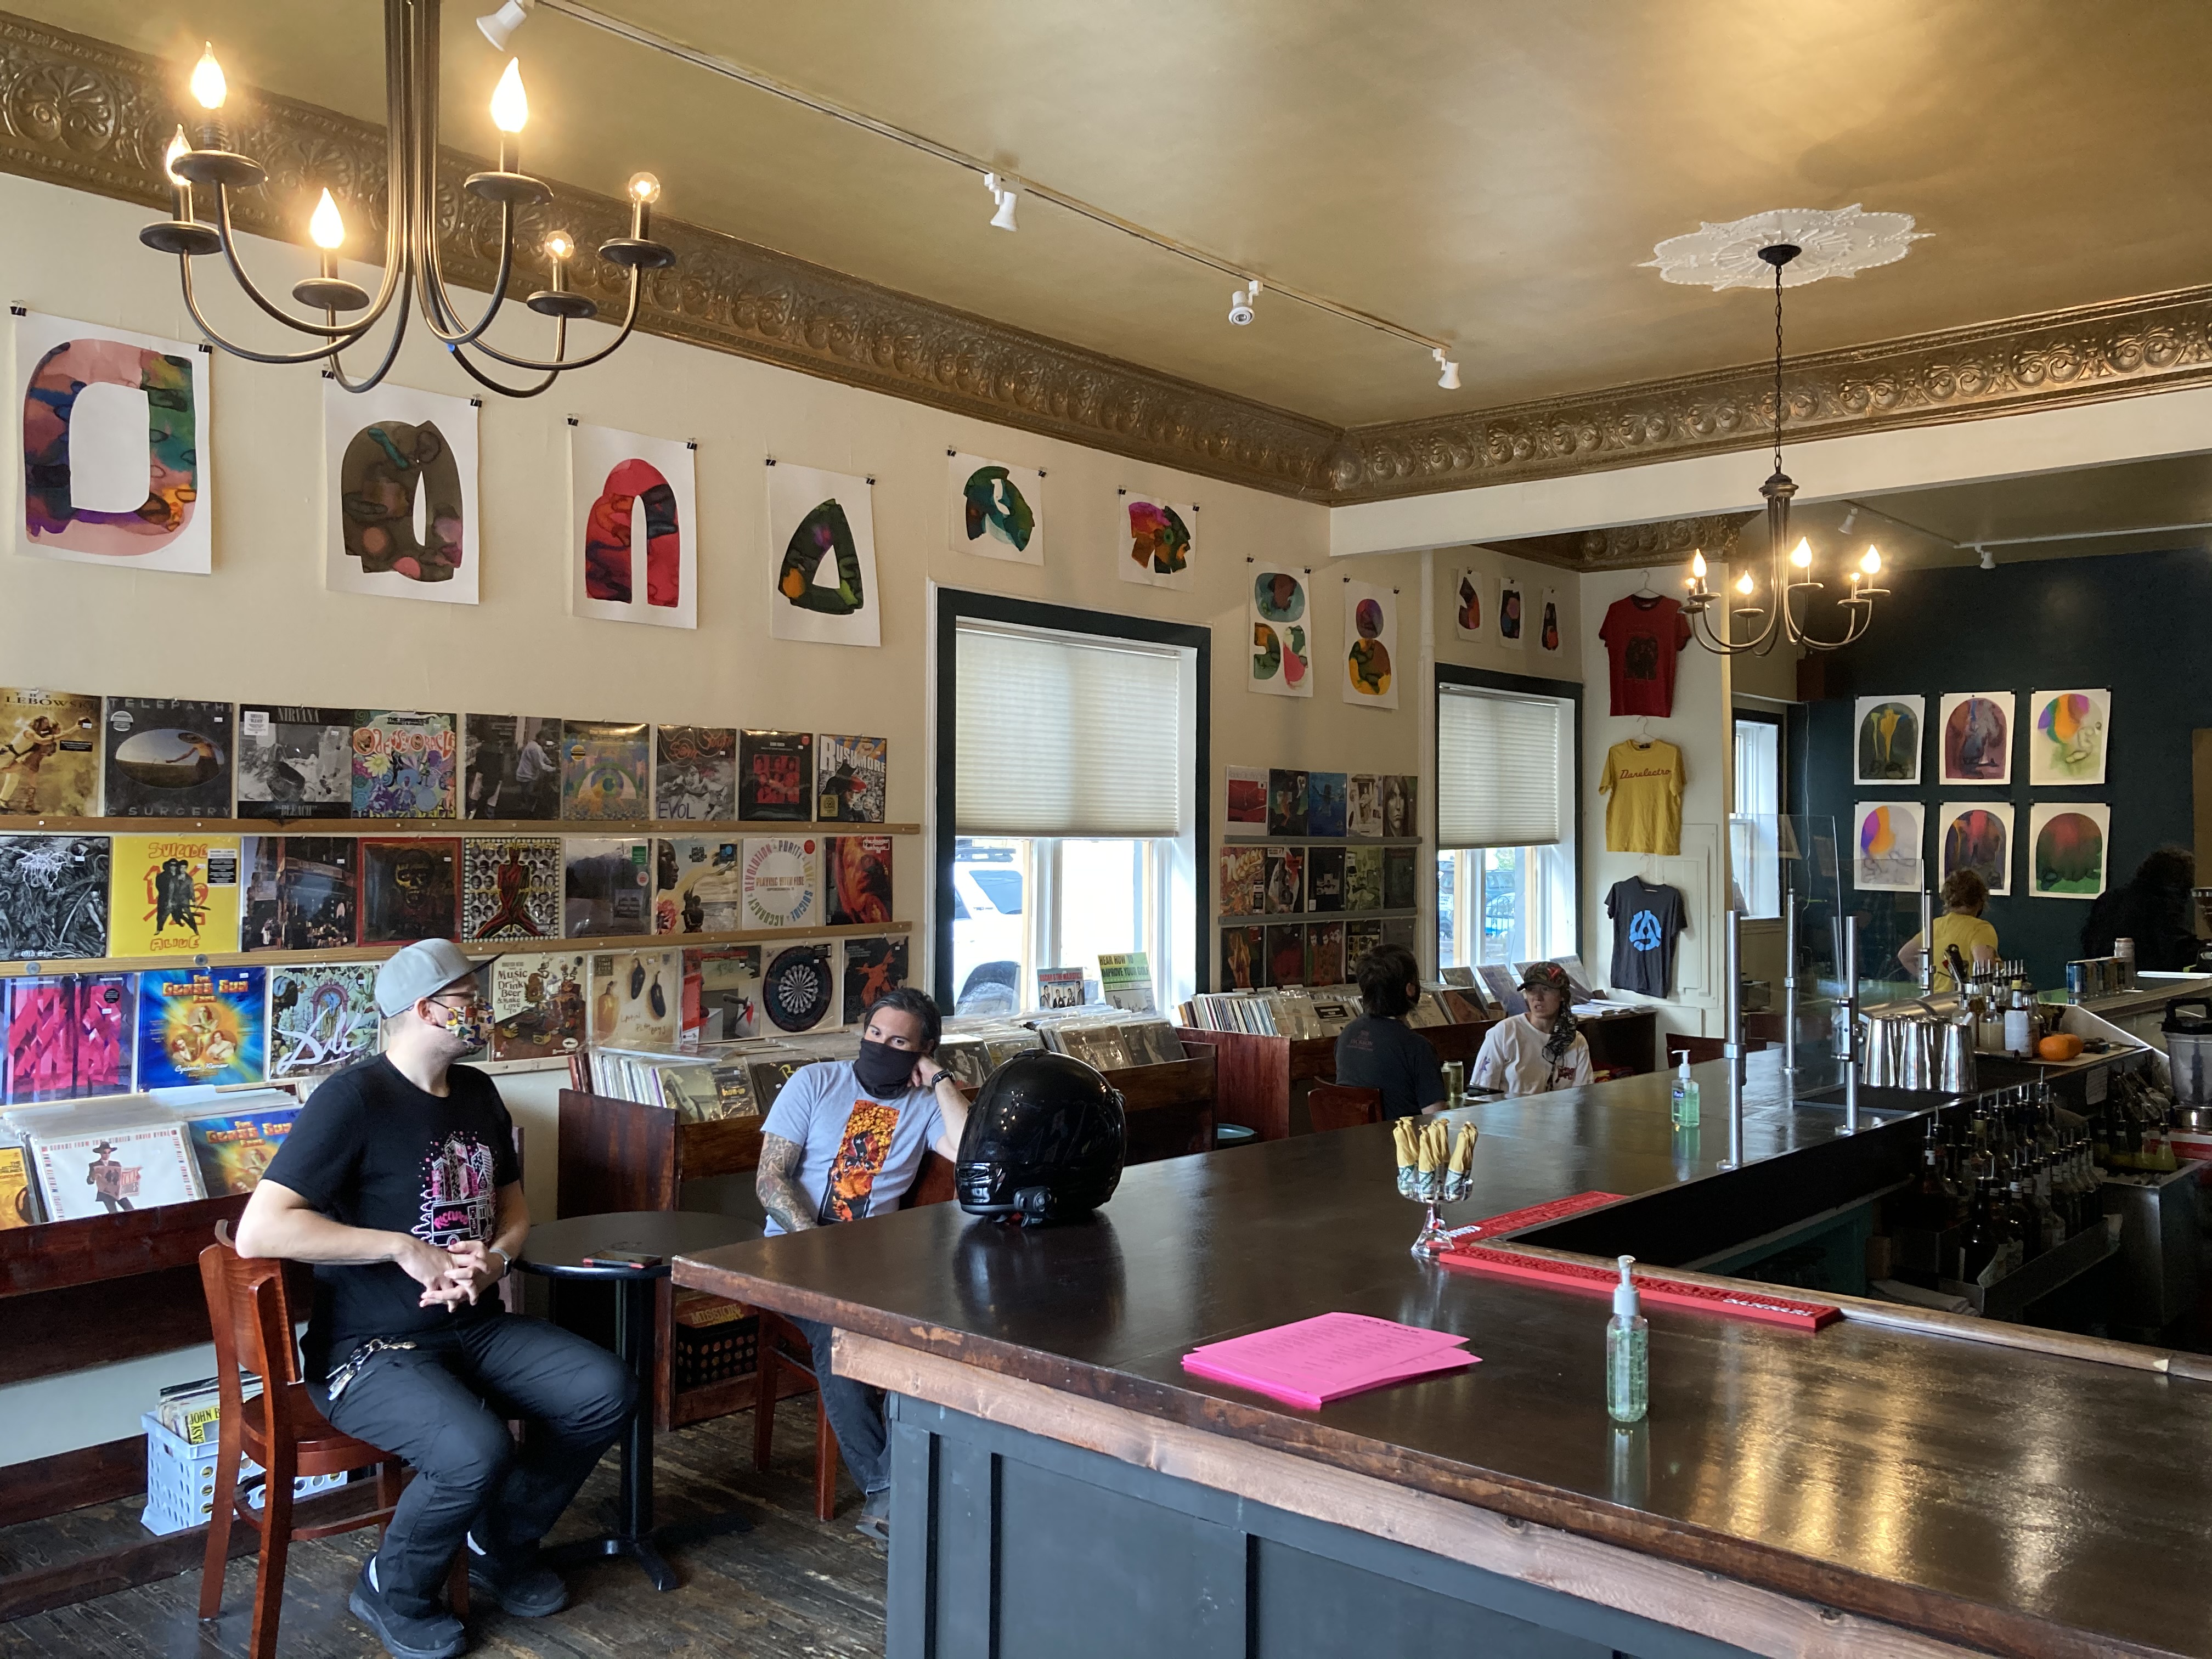 A look inside Wax Bar, Ypsilanti's new record-themed lounge